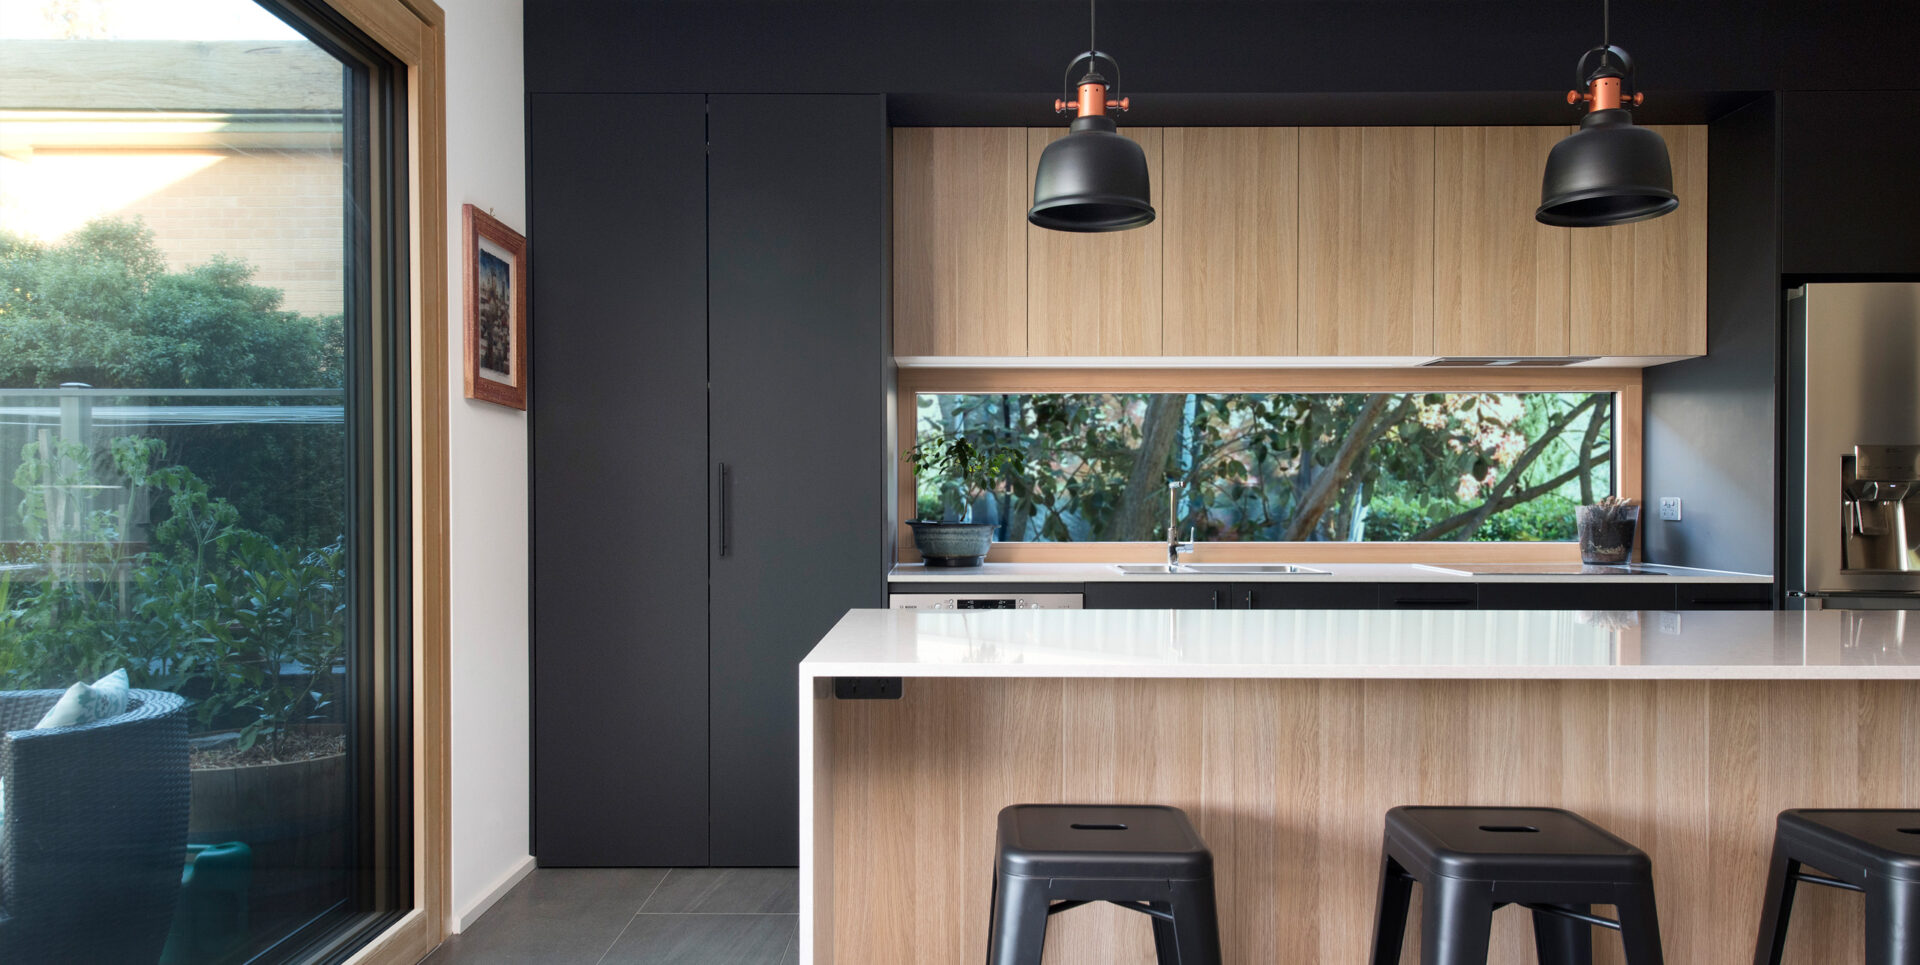 Sydney architectural kitchen with view